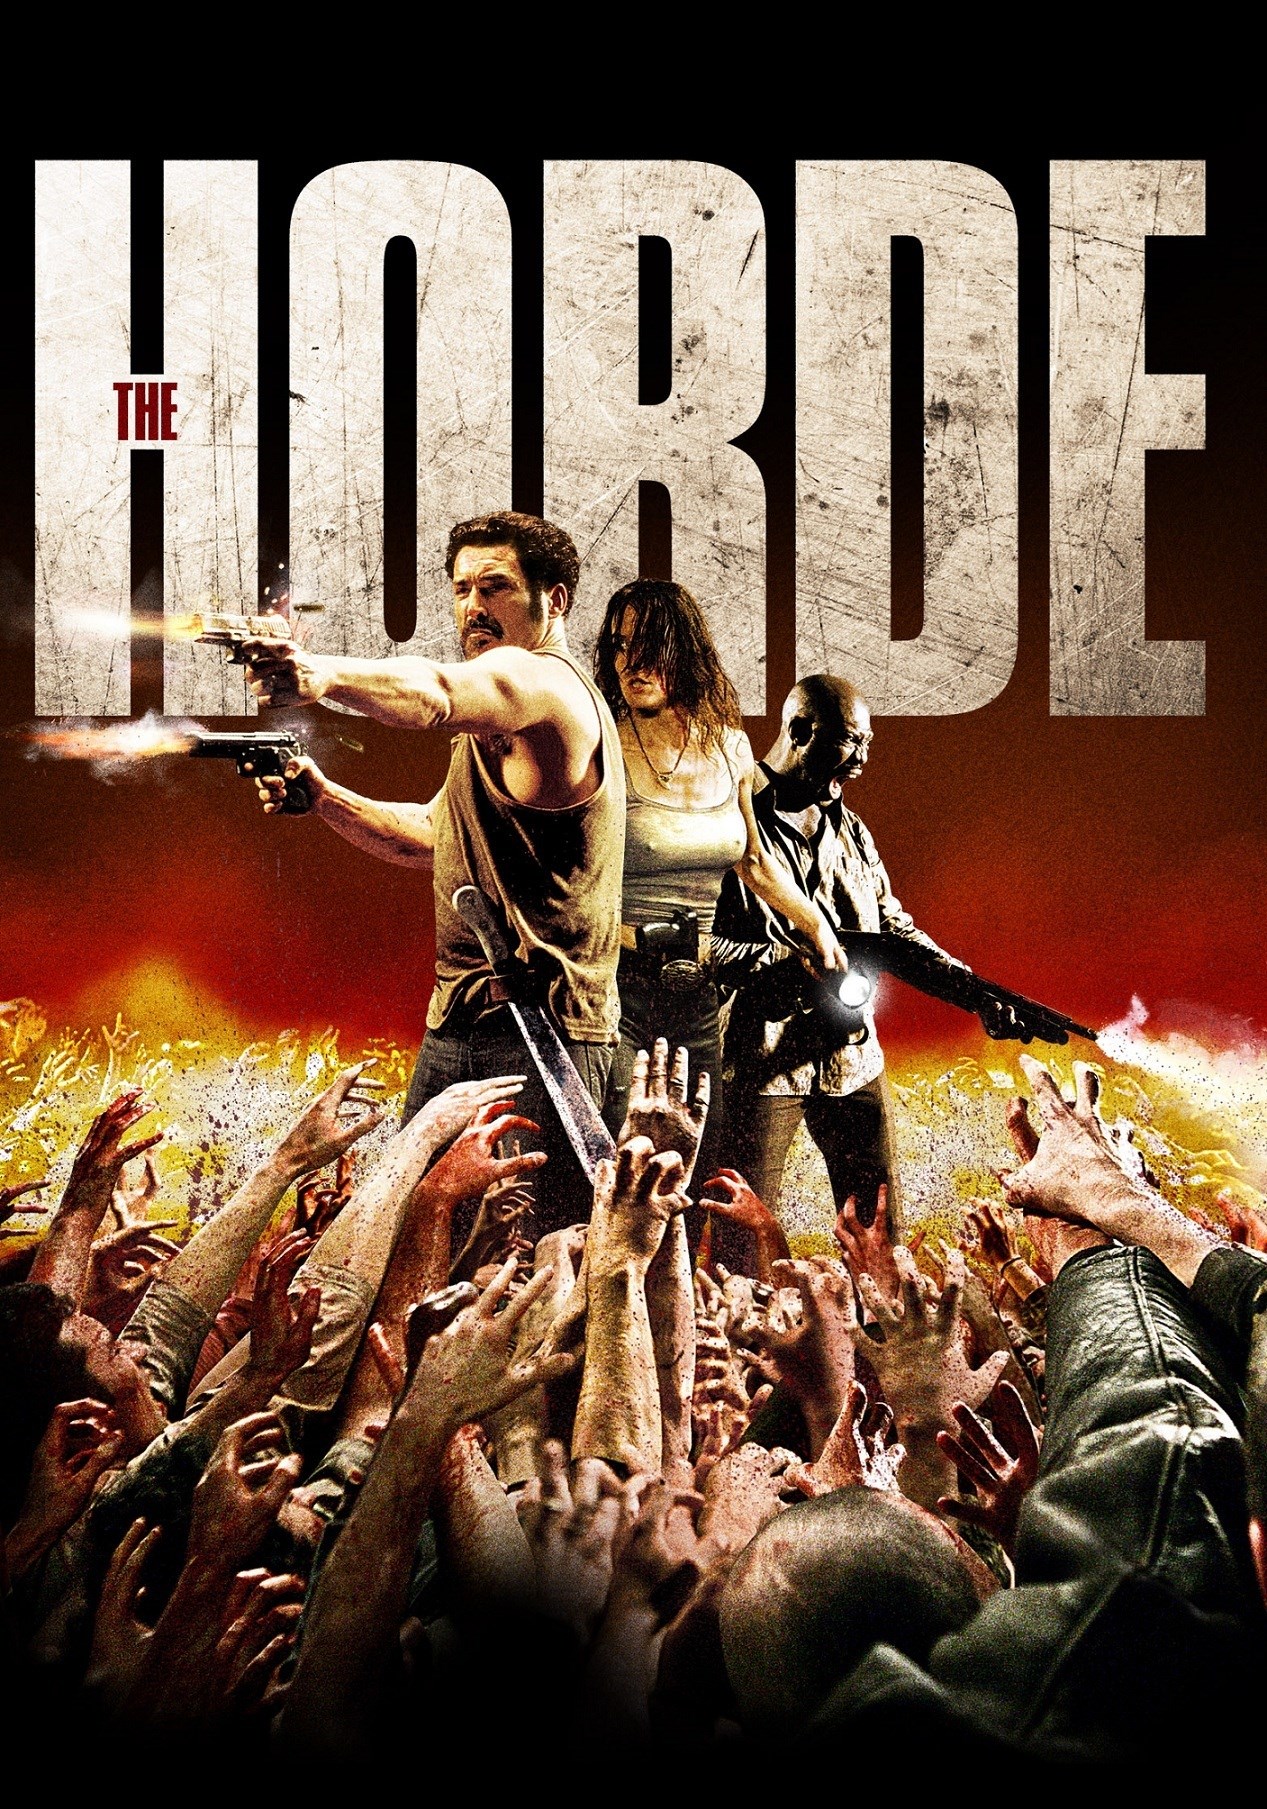 The horde 2009